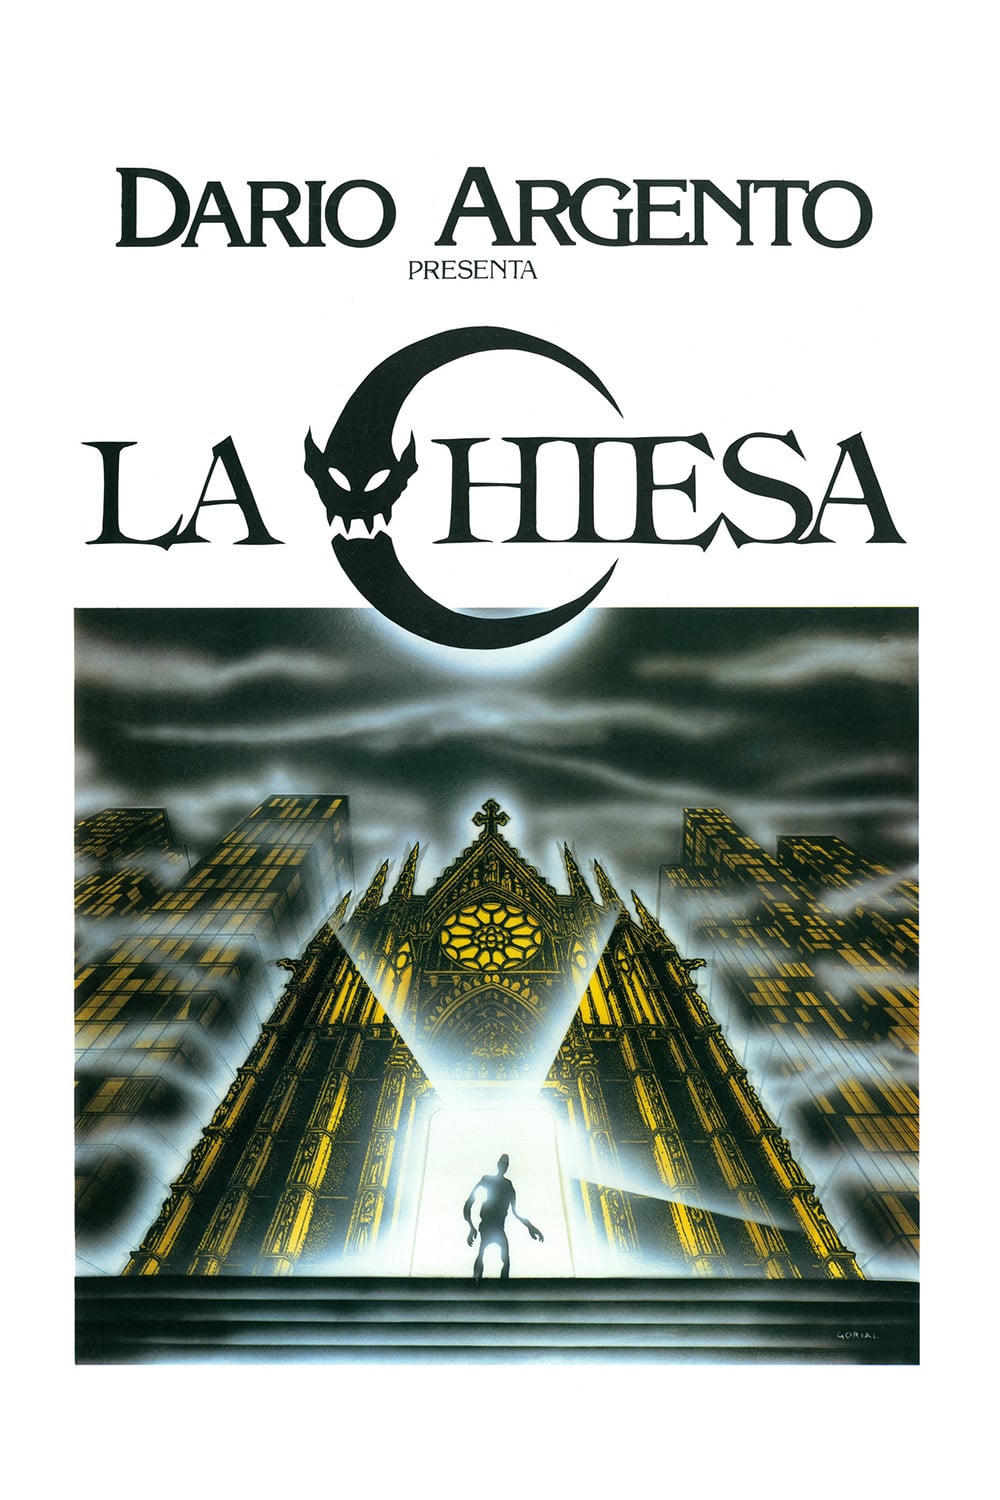 Poster for the movie "La chiesa"